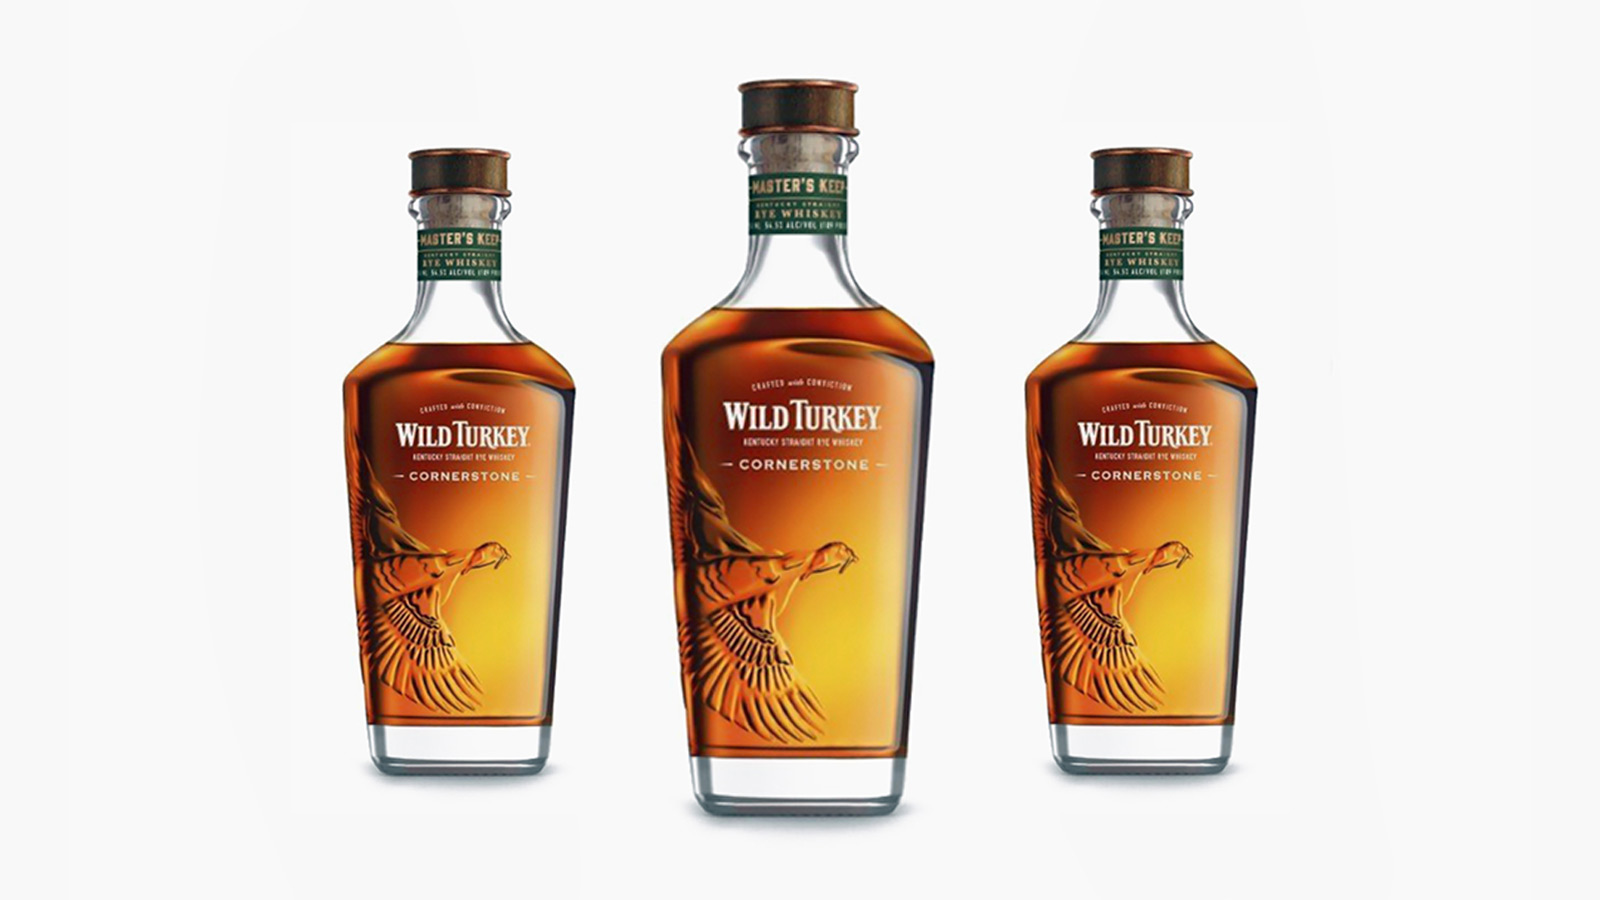 Wild Turkey Master’s Keep Cornerstone Rye Whiskey